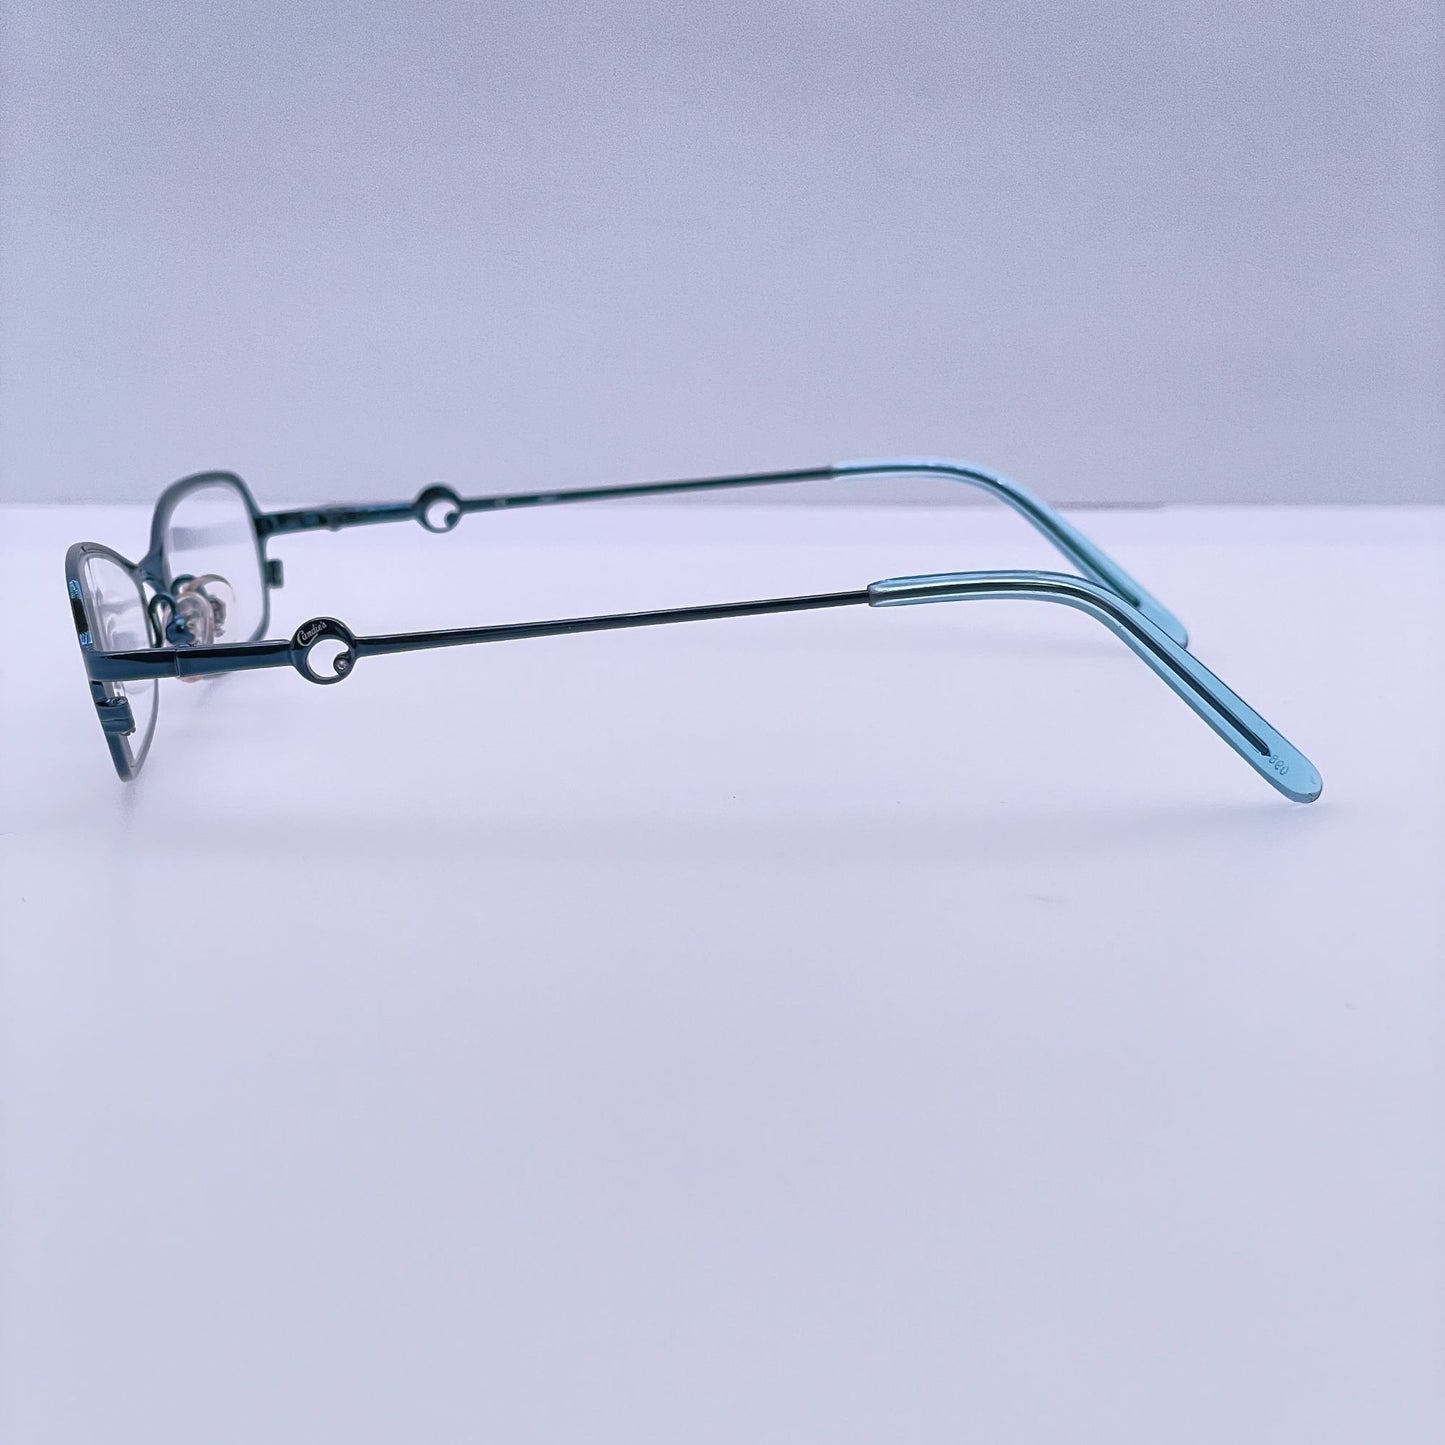 Candies Eyeglasses Eye Glasses Frames C Tia 46-18-135 BL